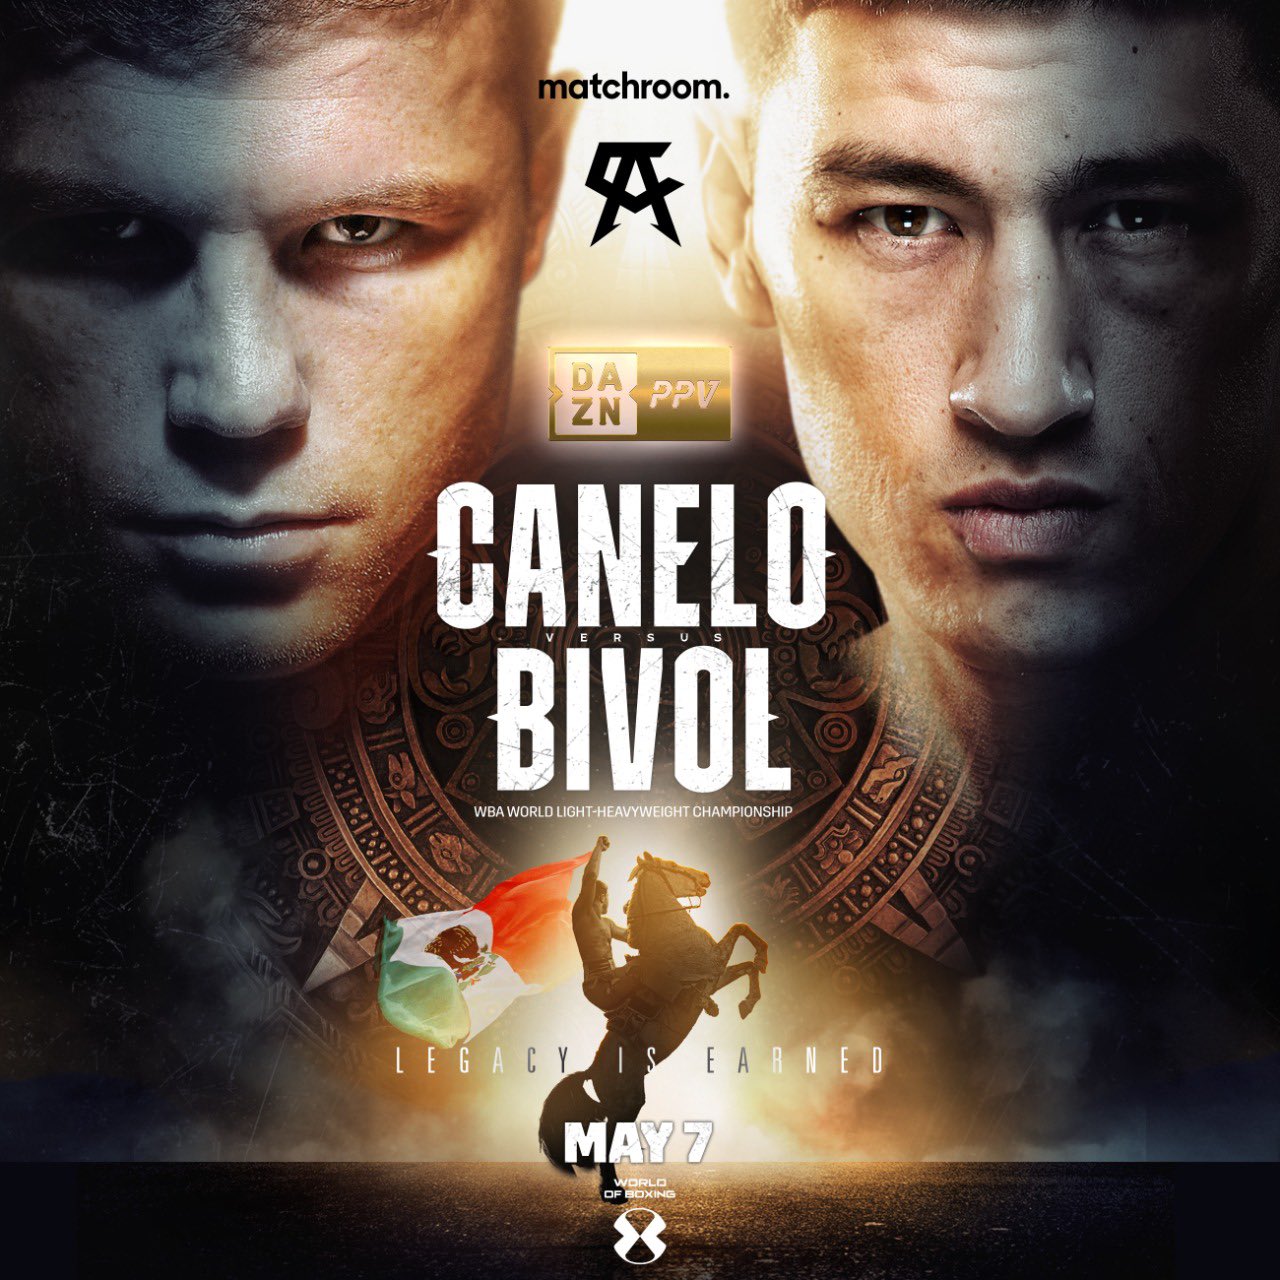 Canelo Alvarez vs. Dimitri Bevol, official May 7 (Image: Twitter / @Canelo)